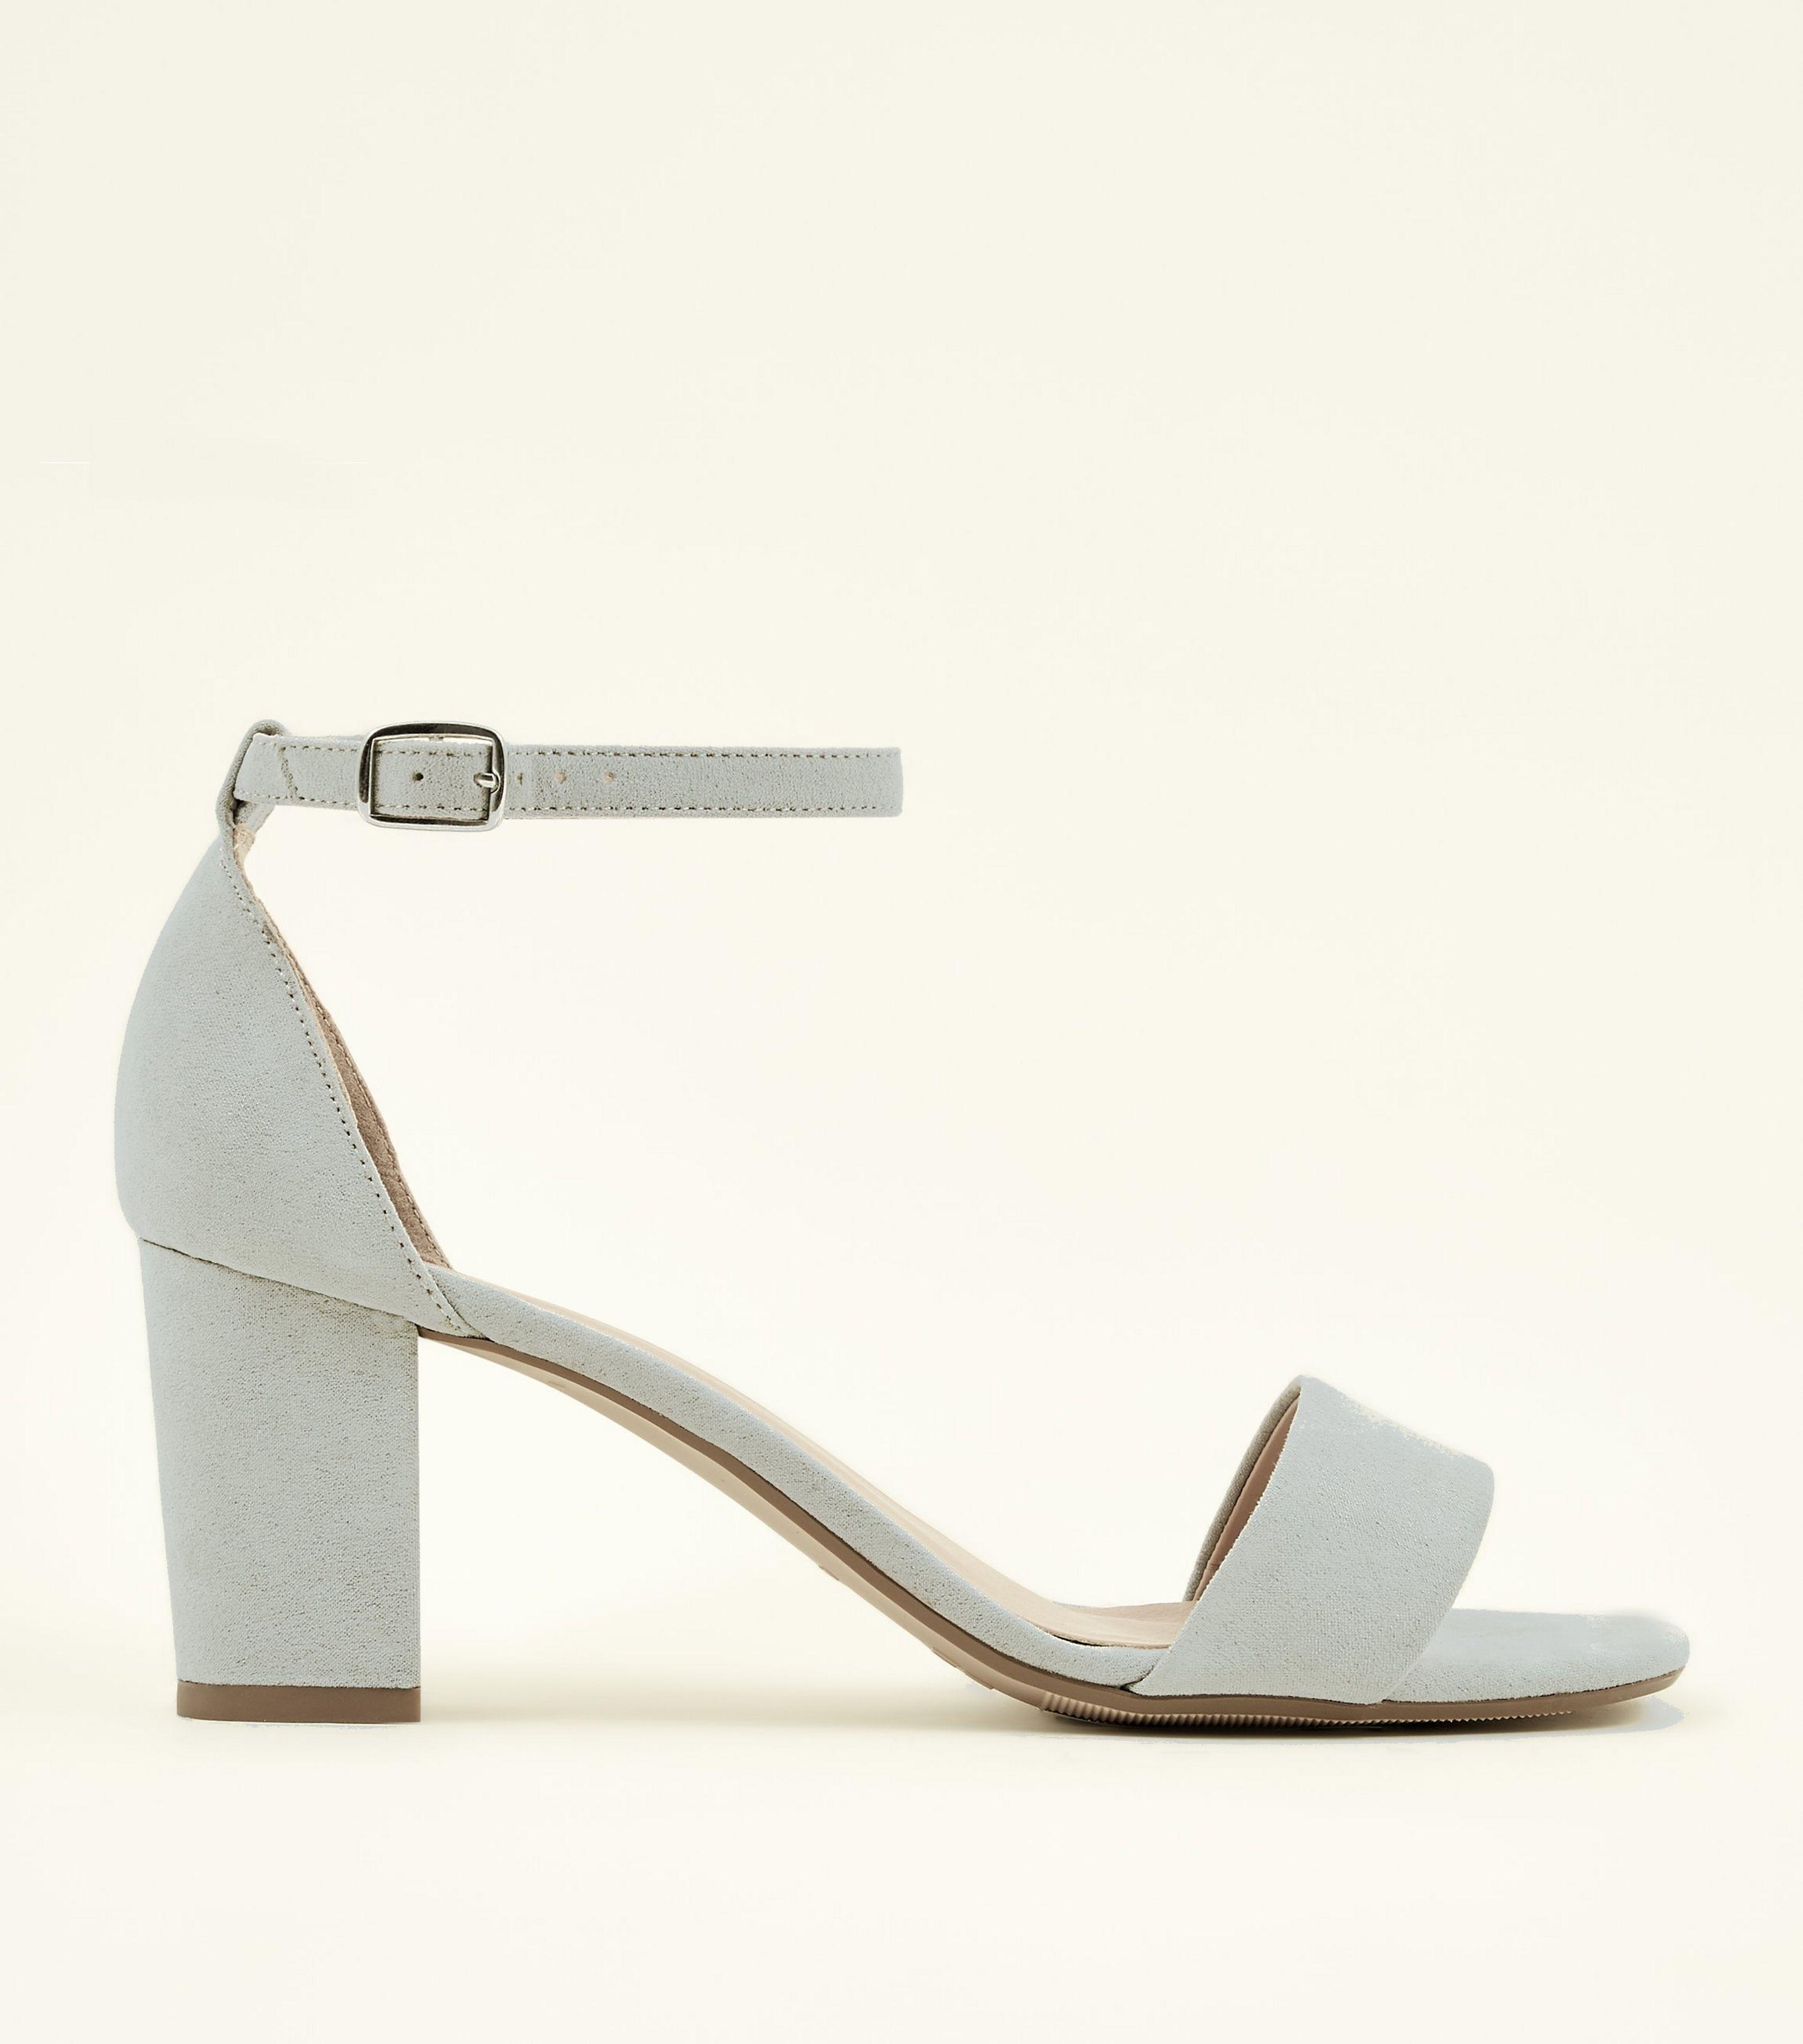 new heels for girls